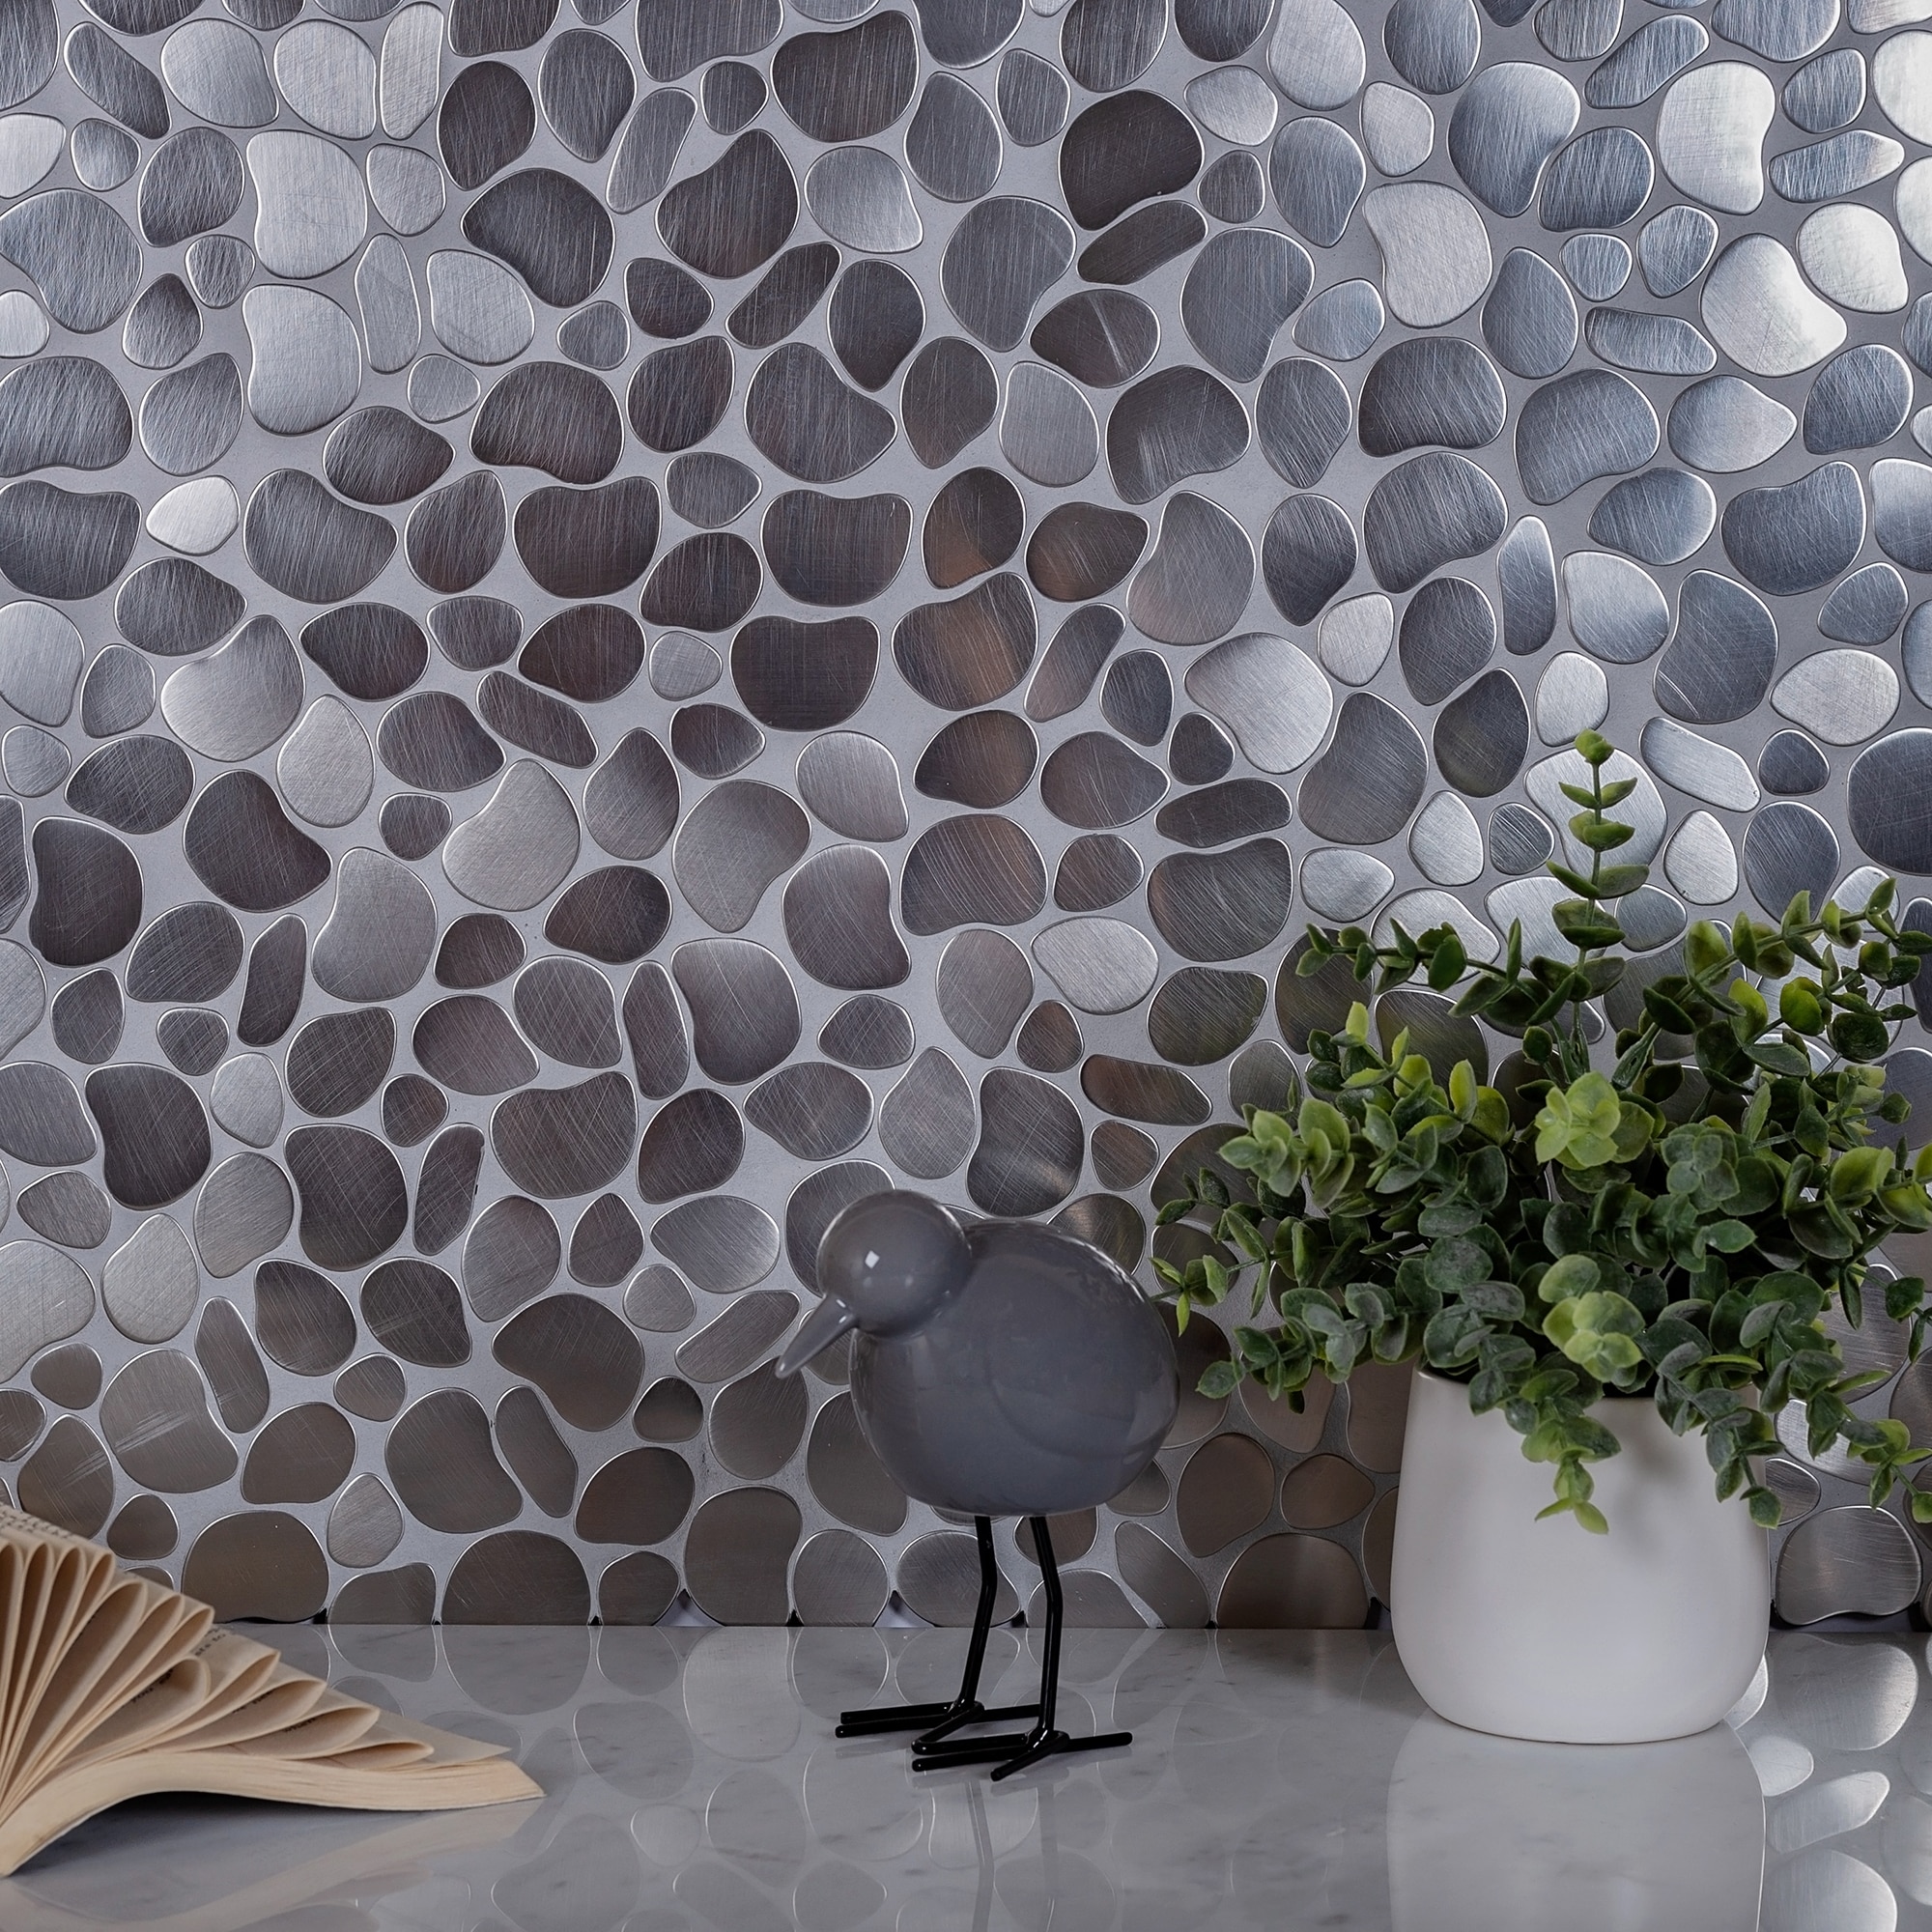 Apollo Tile Metal 12-in x 12-in Polished Metal Pebble Stone Look